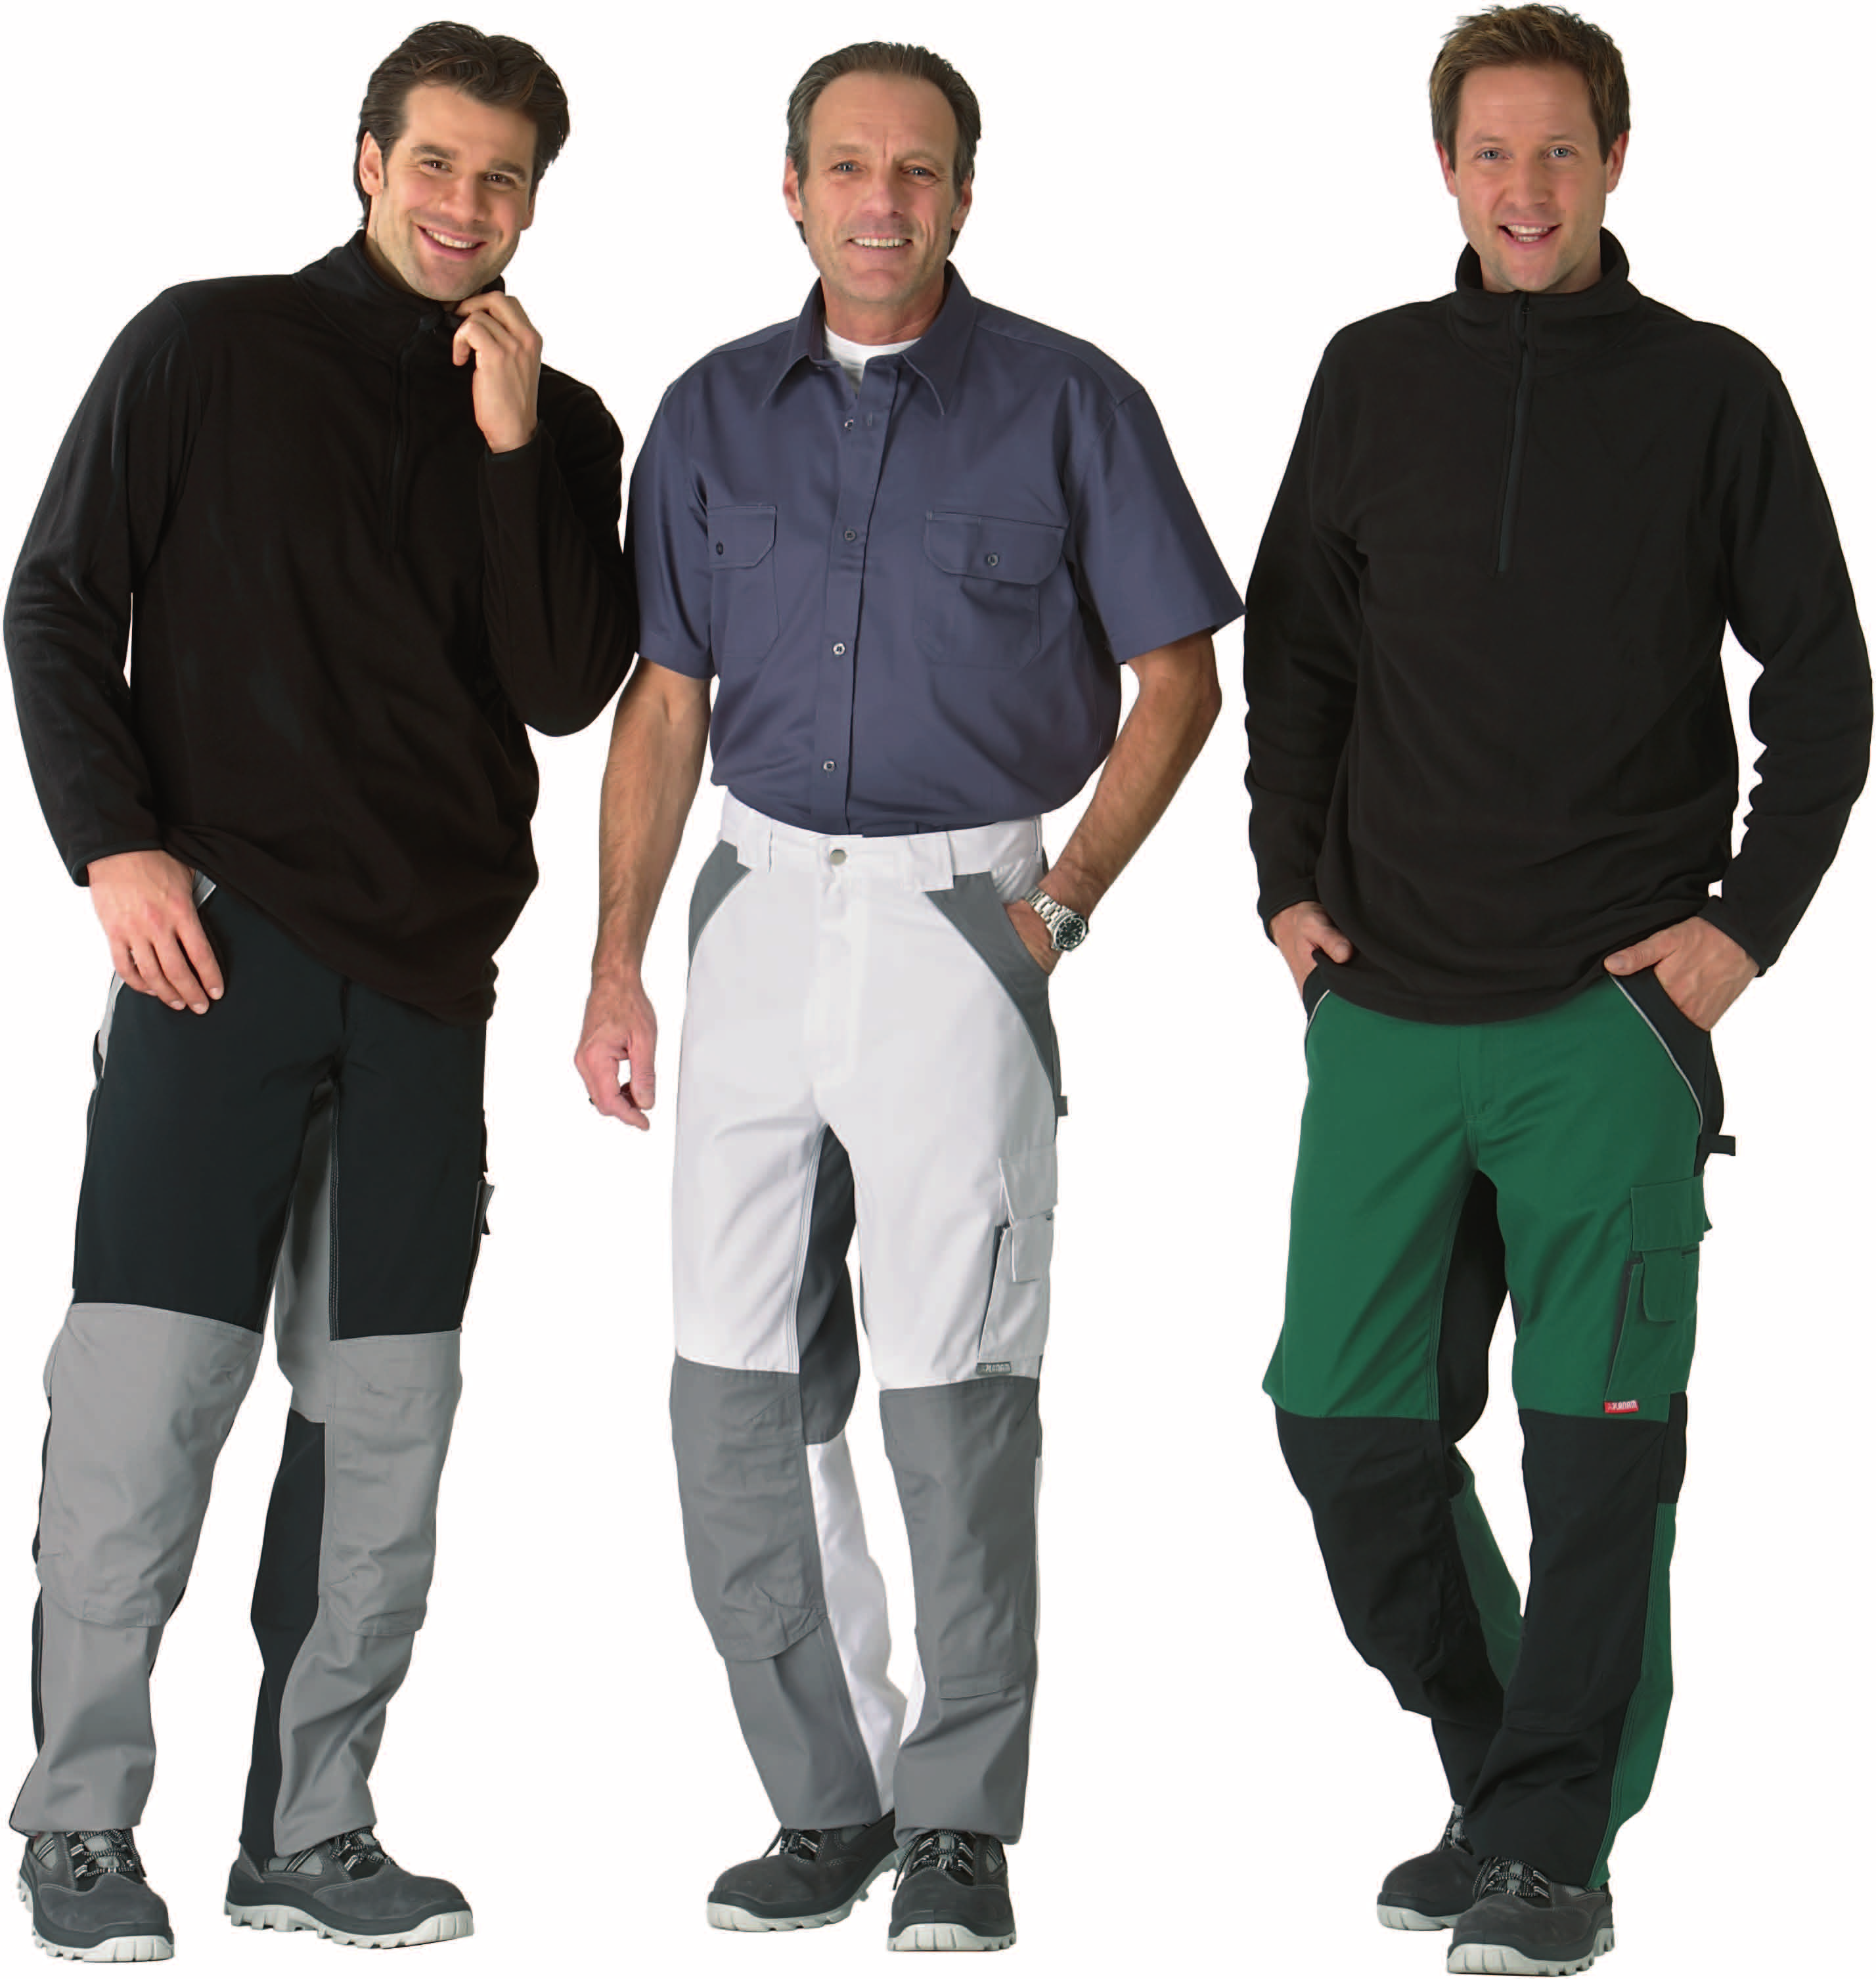 Spodnie z paskiem Pantalón con cintura elástica Dopasowany komfort noszenia.